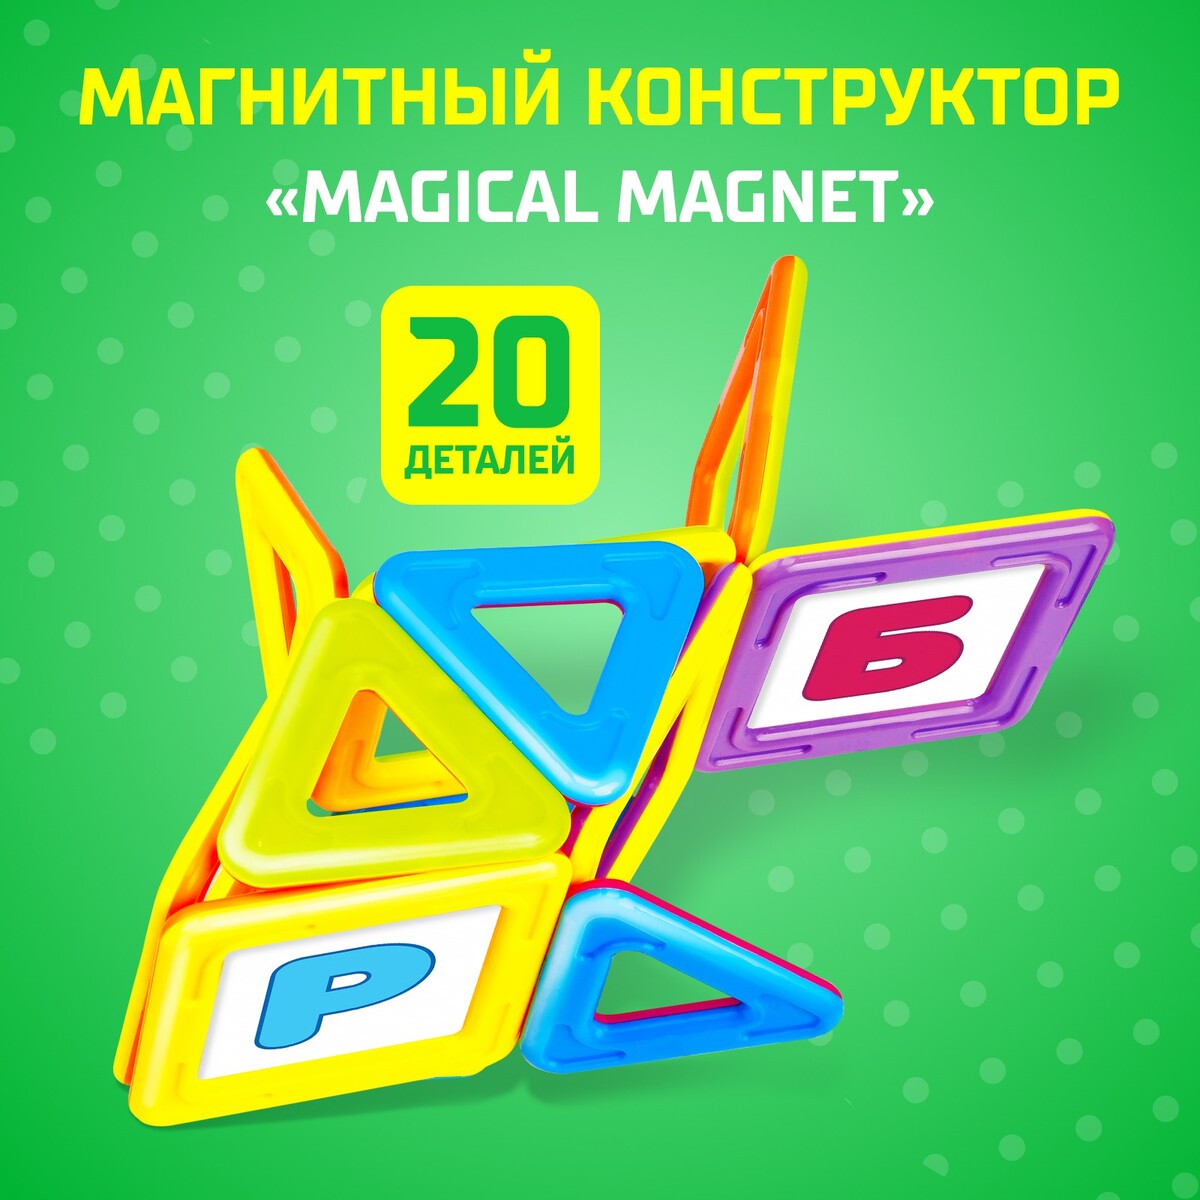   magical magnet, 20 ,  